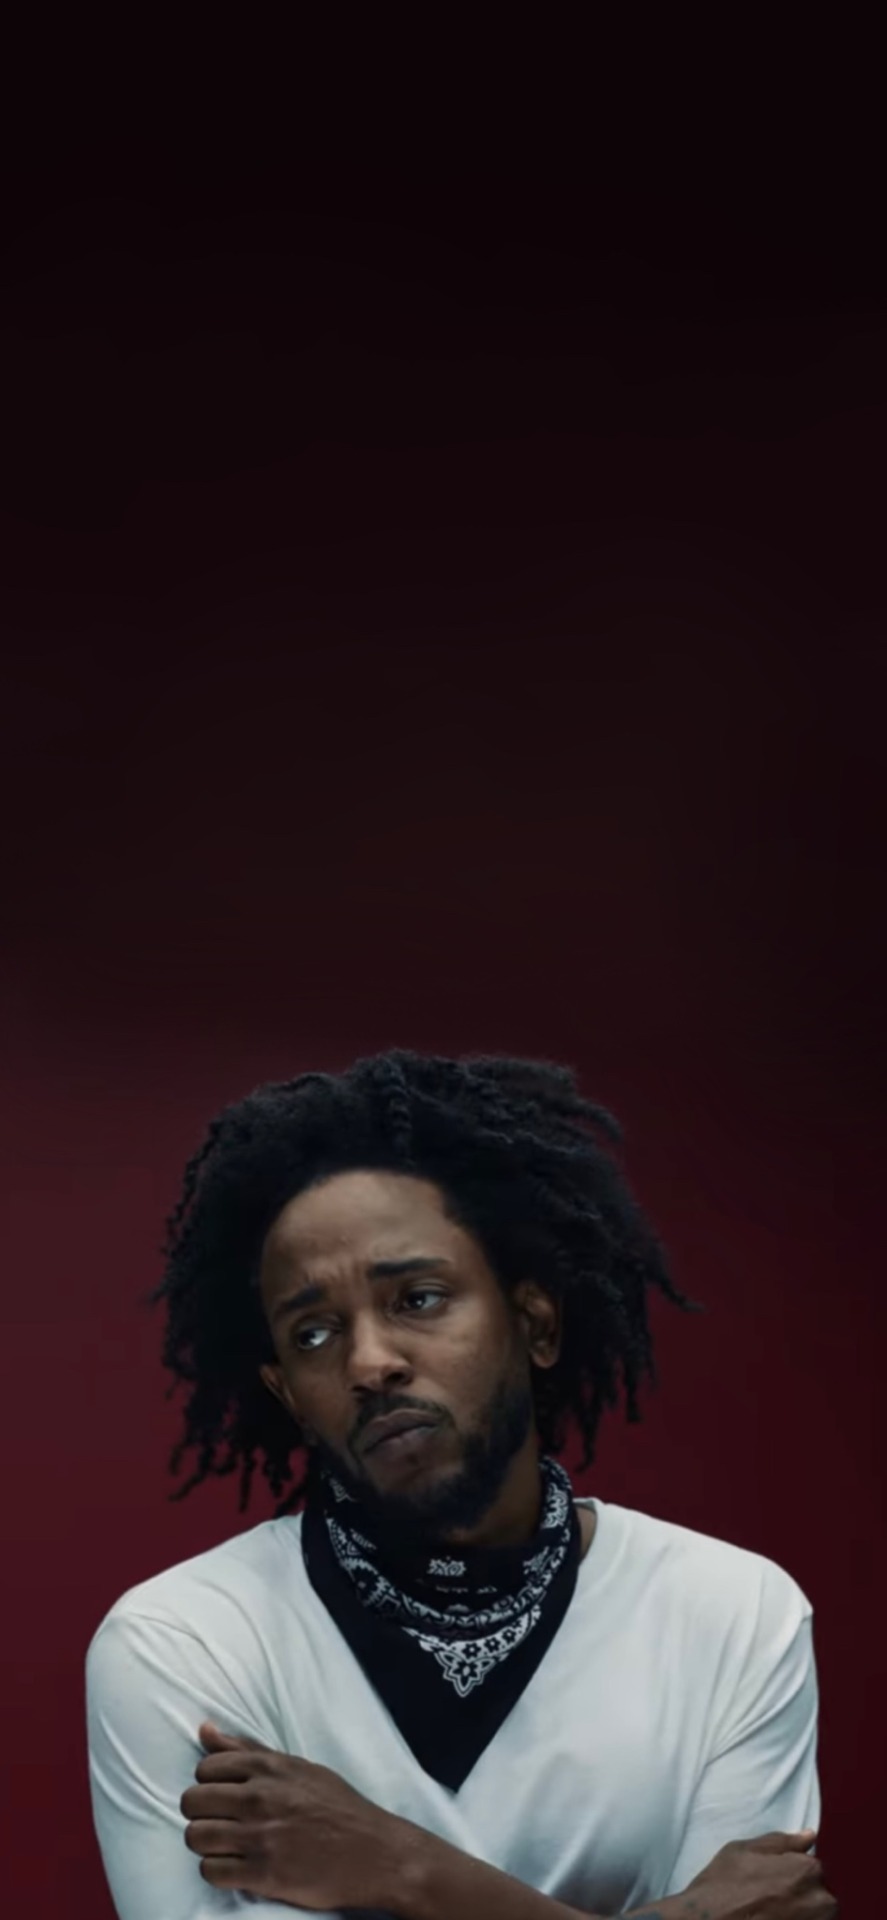 J Cole Kendrick Lamar Wallpapers